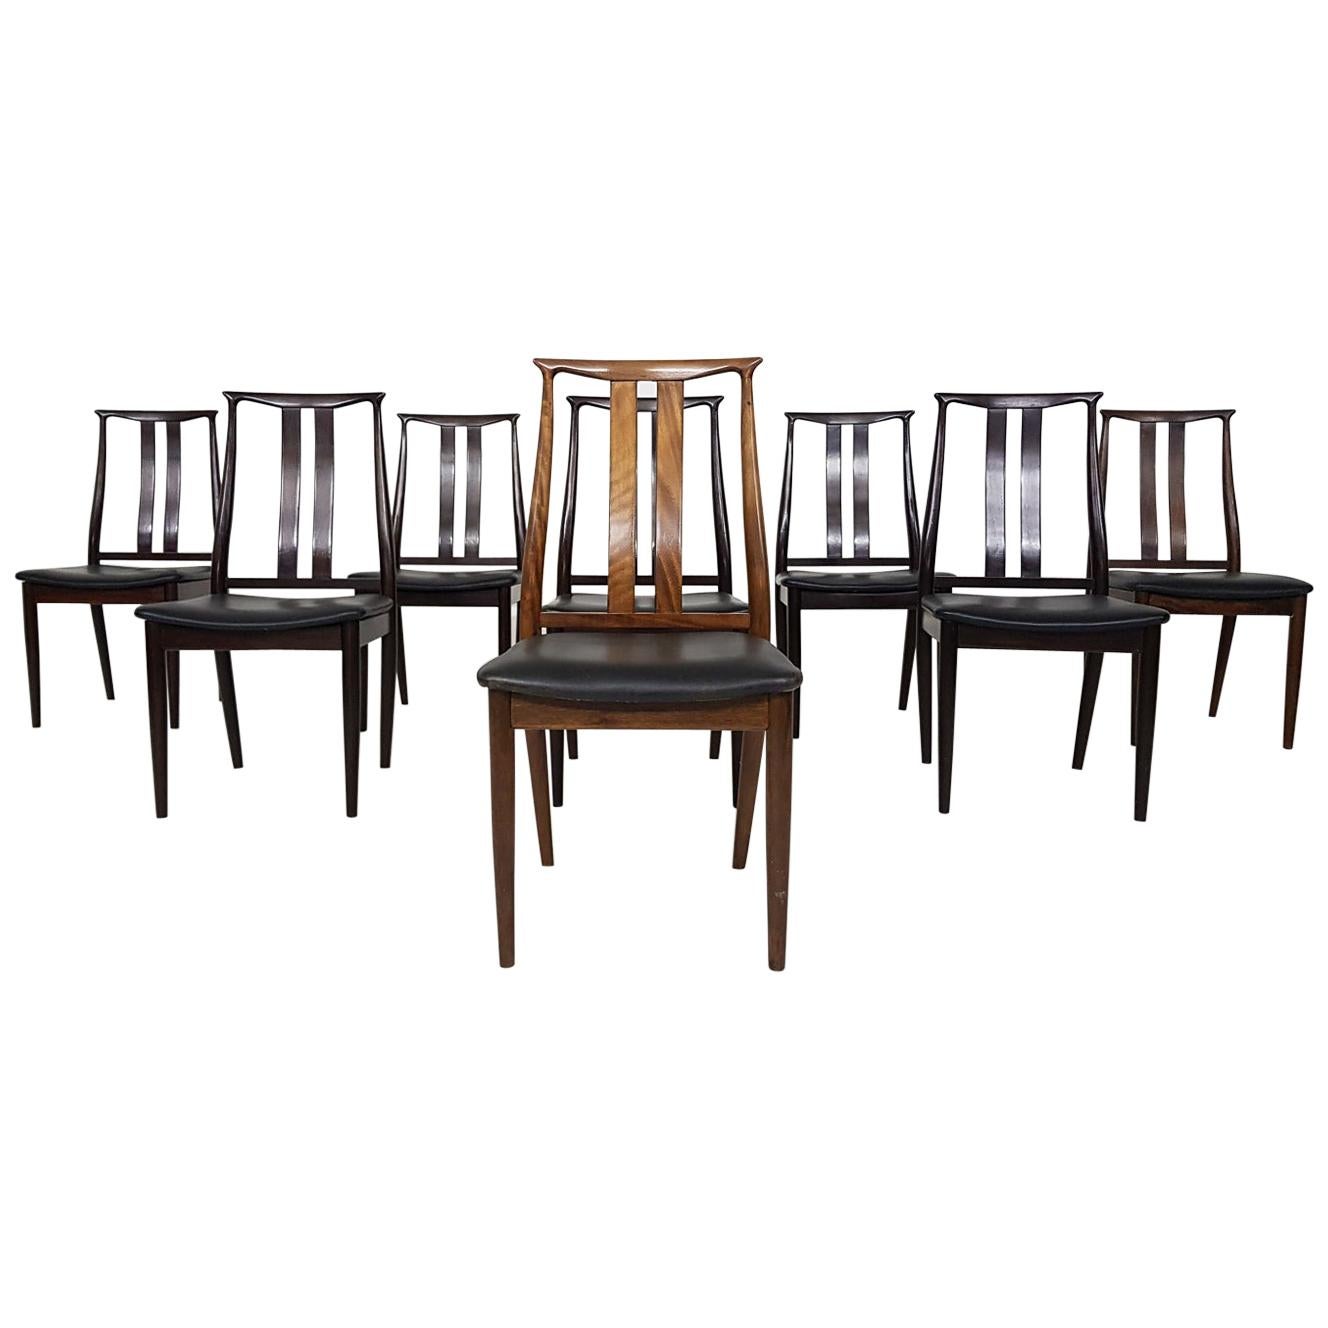 Set of 8 Danish Modern Black Leather Dining Chairs, Denmark, 1960